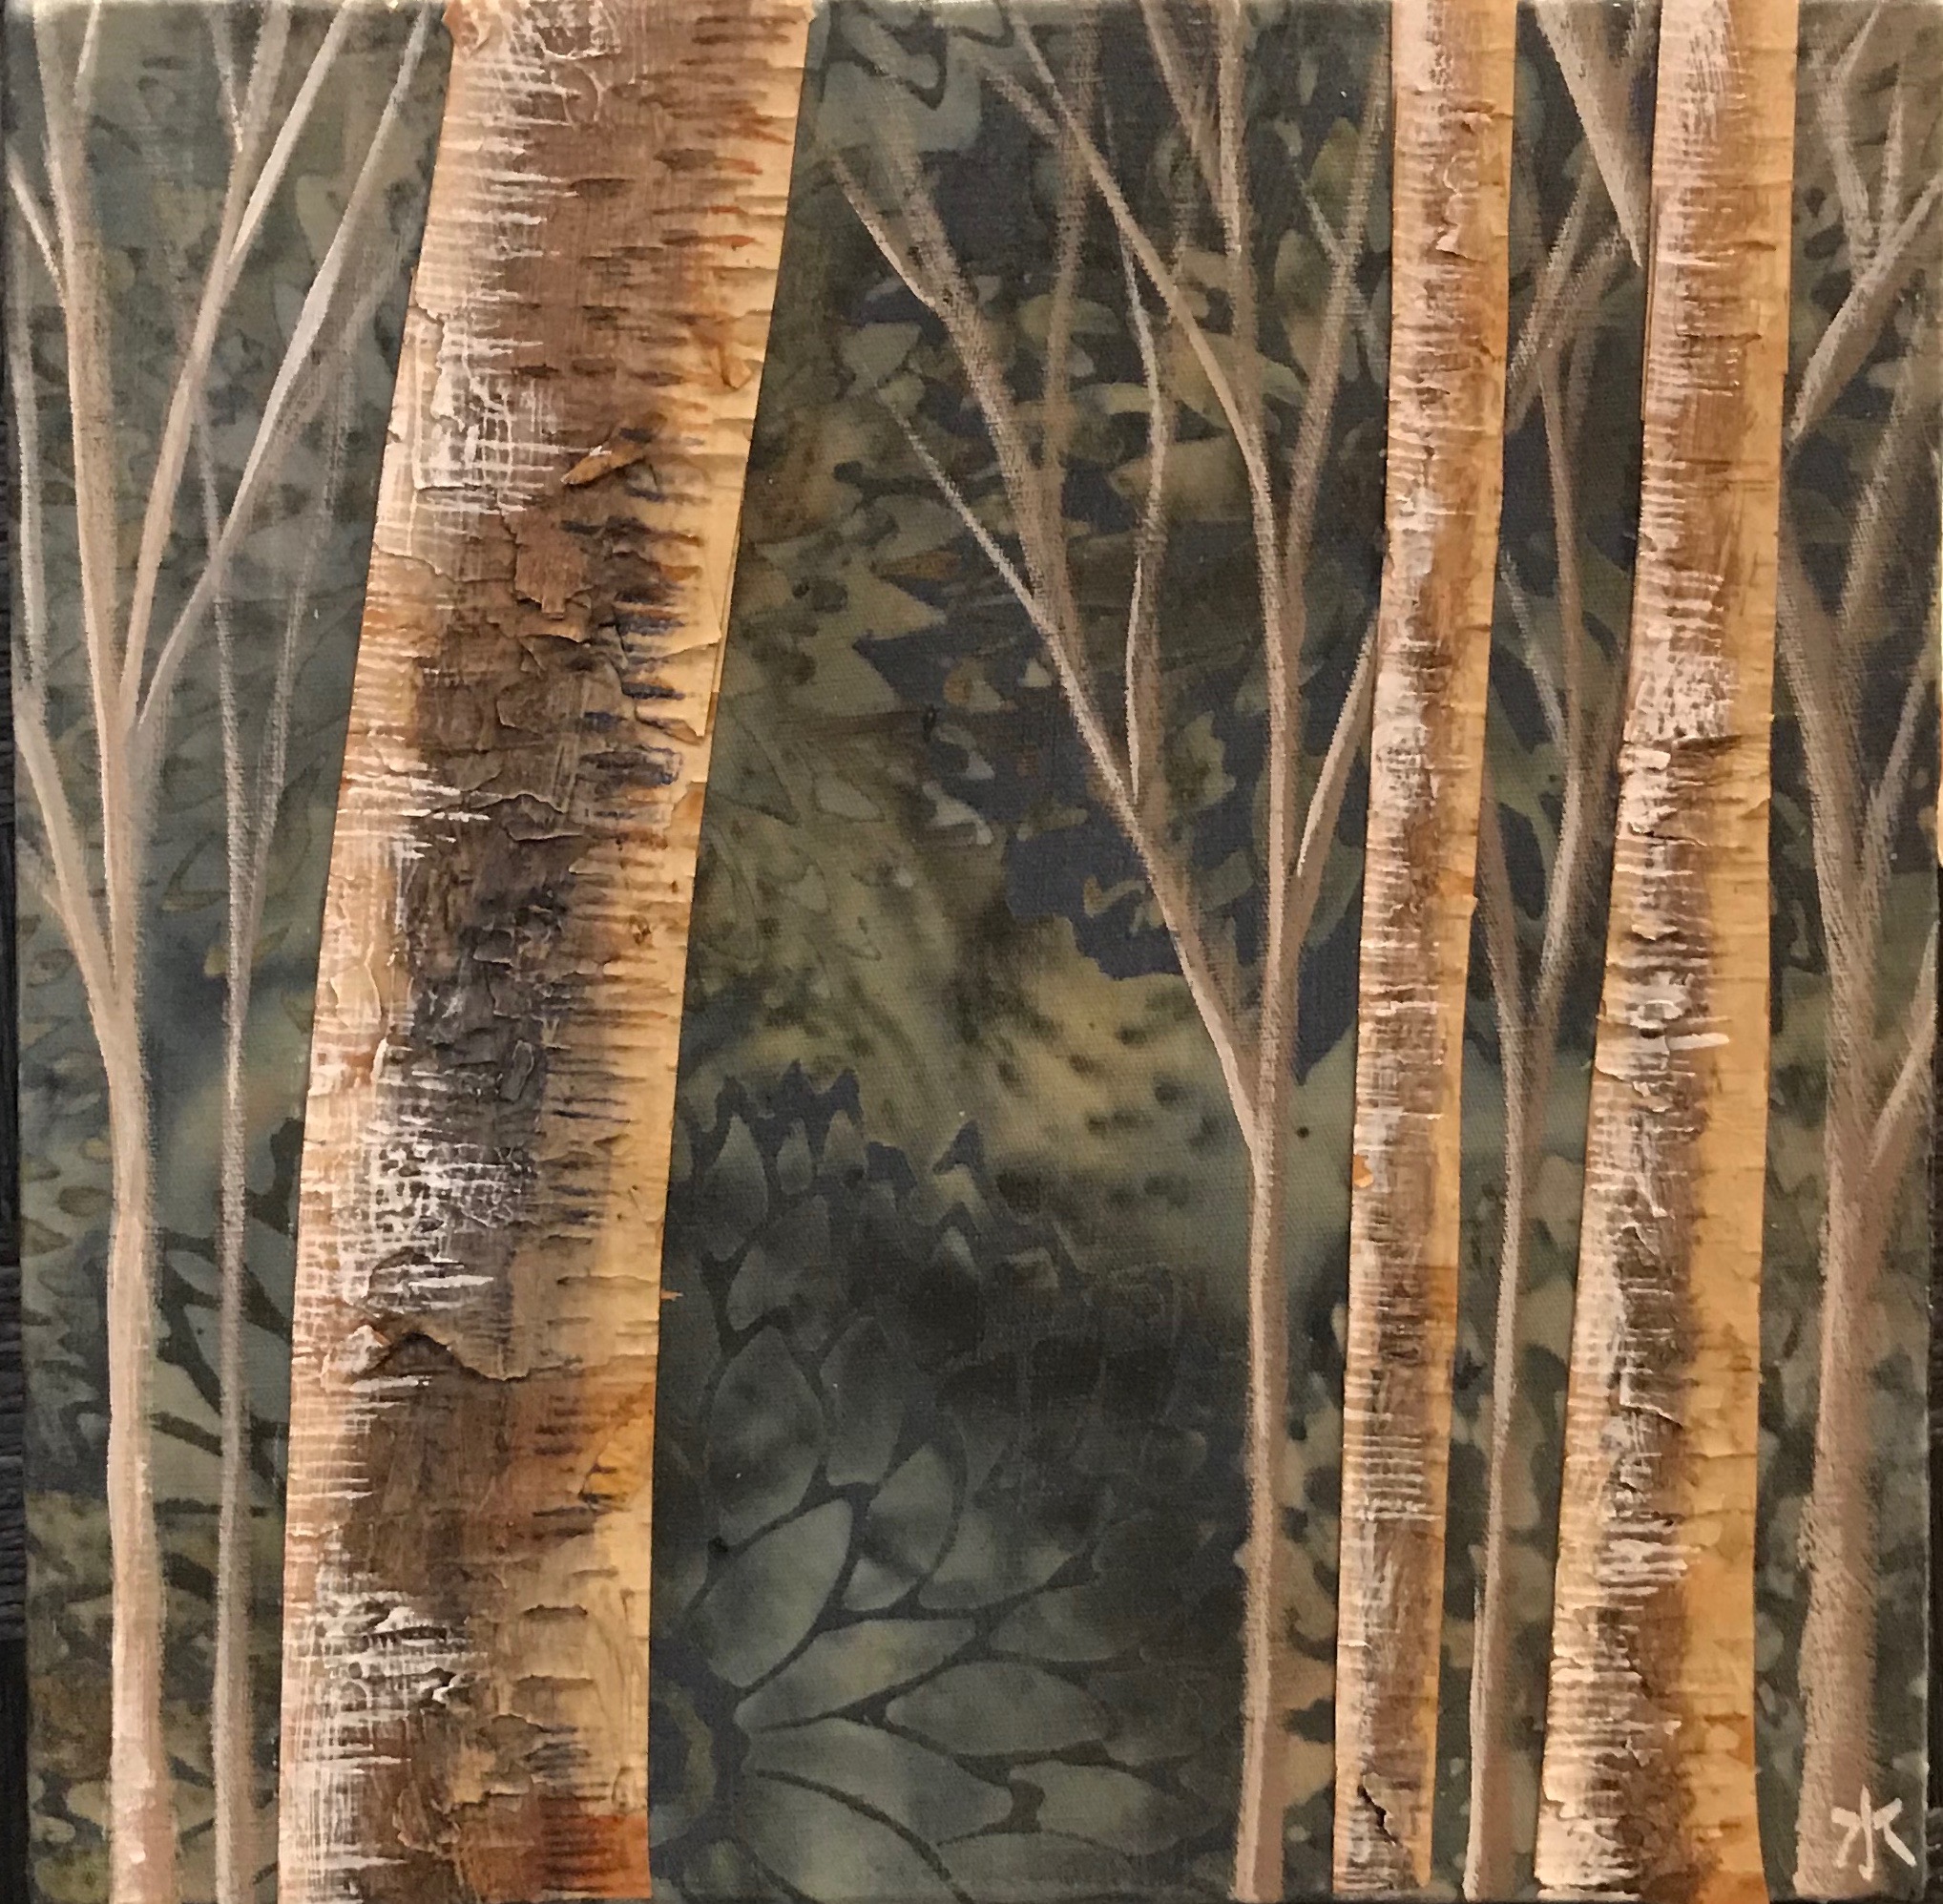  Sold Mixed Media: birch bark and acrylic on fabric. 6” x 6” 